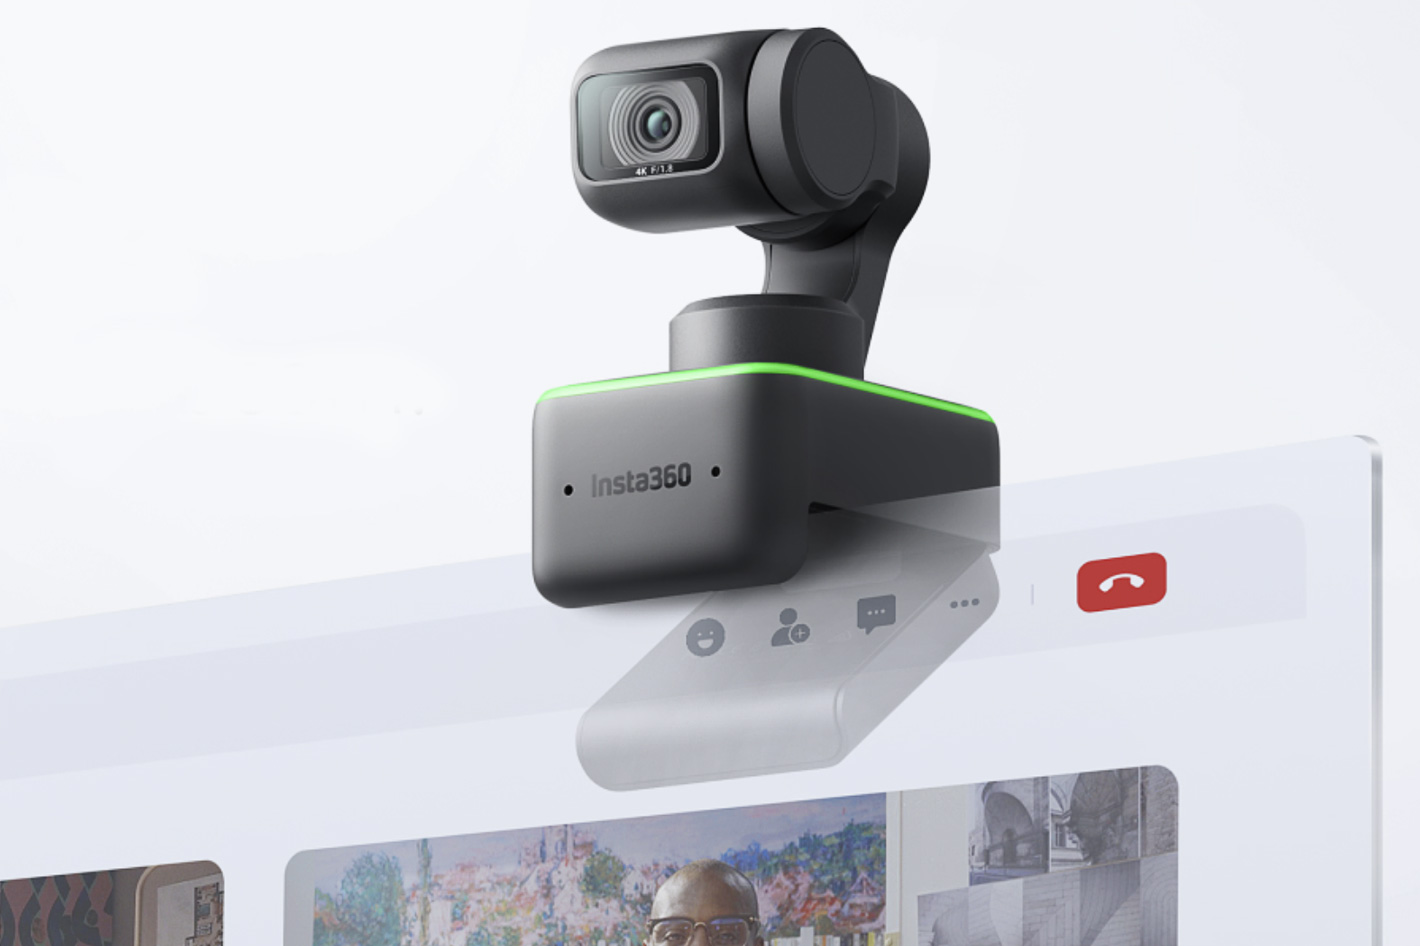 Insta360 Link: an AI-powered 4K webcam with a 3-axis gimbal